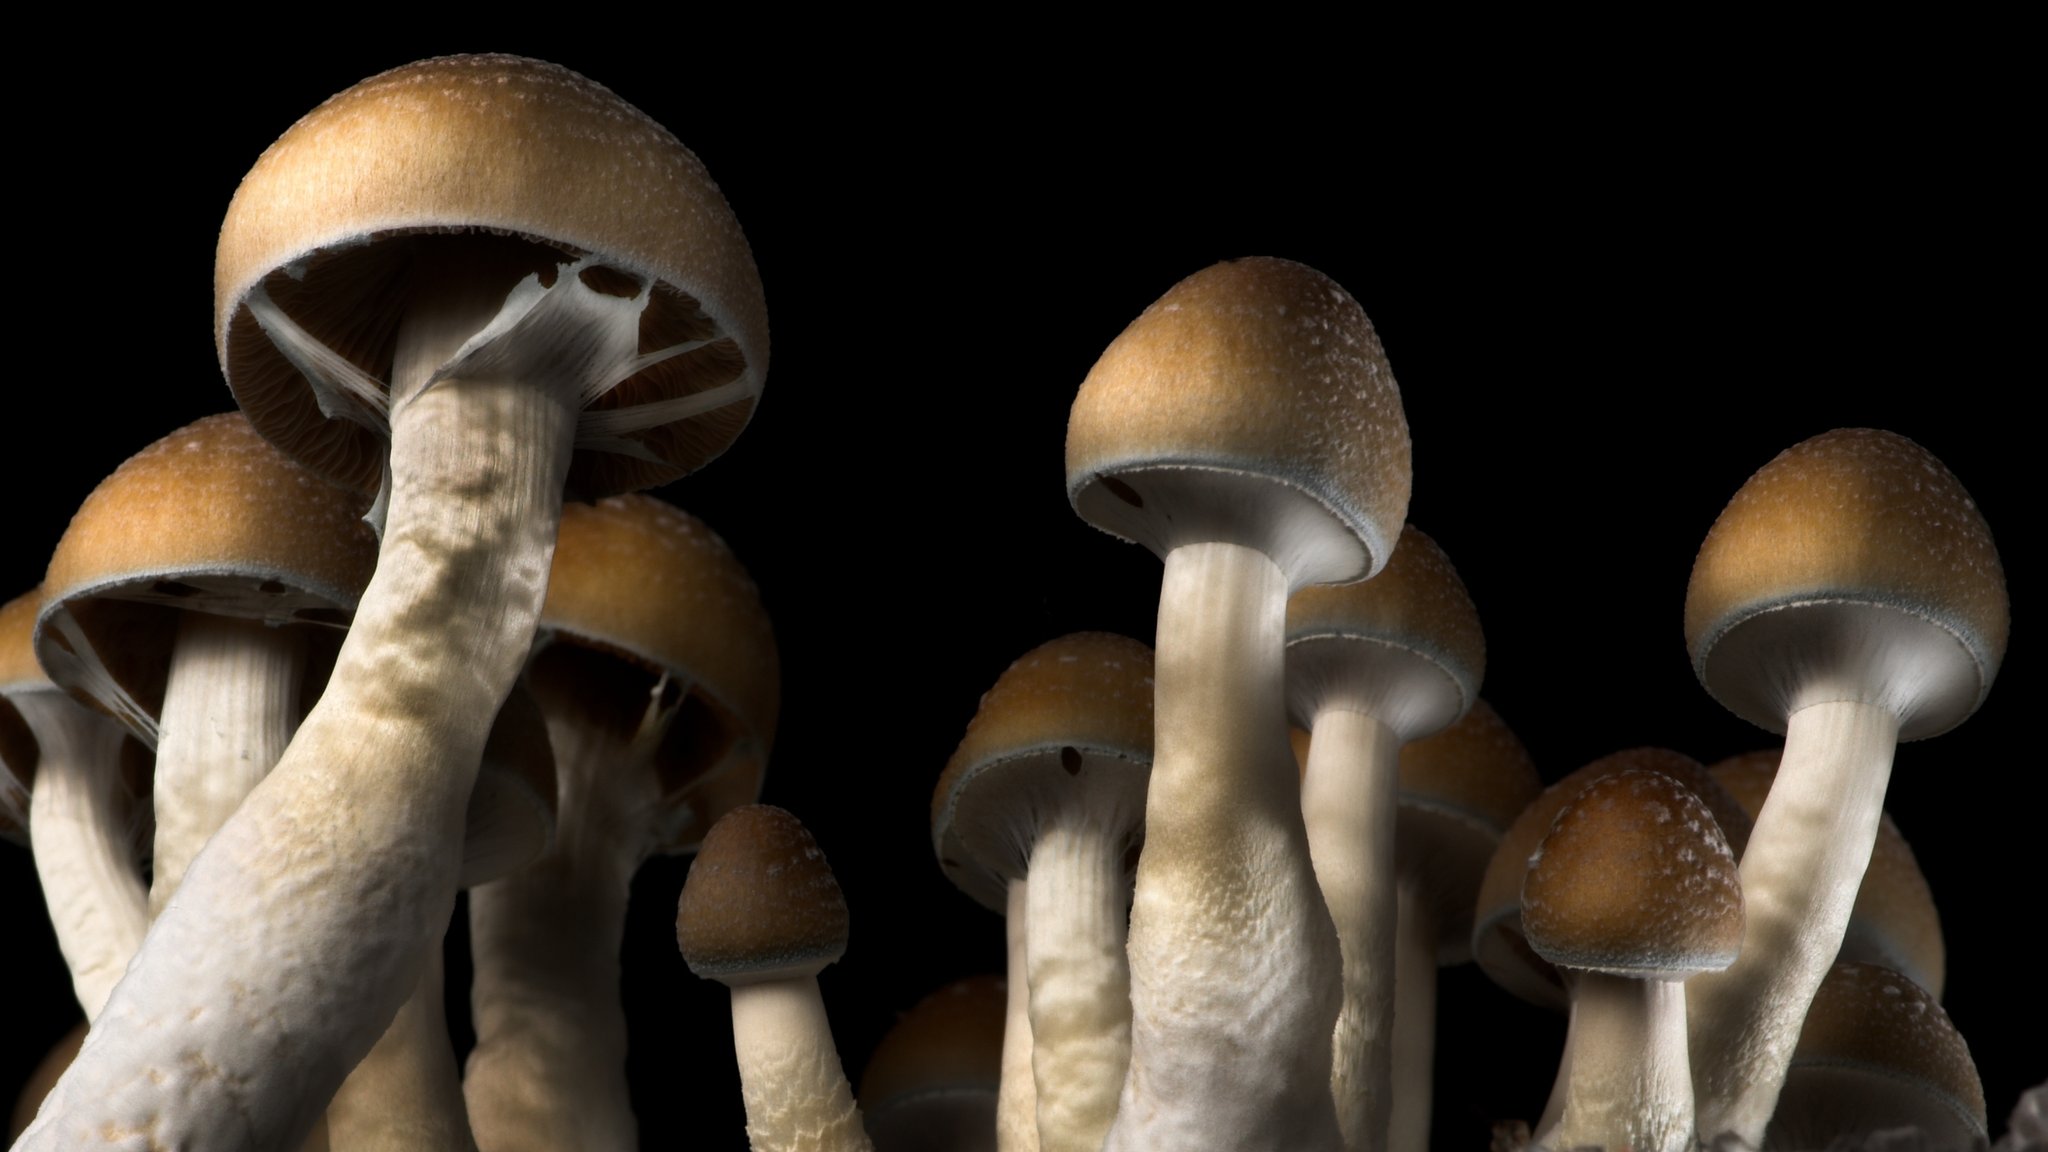 Magic mushrooms can 'reset' depressed brain